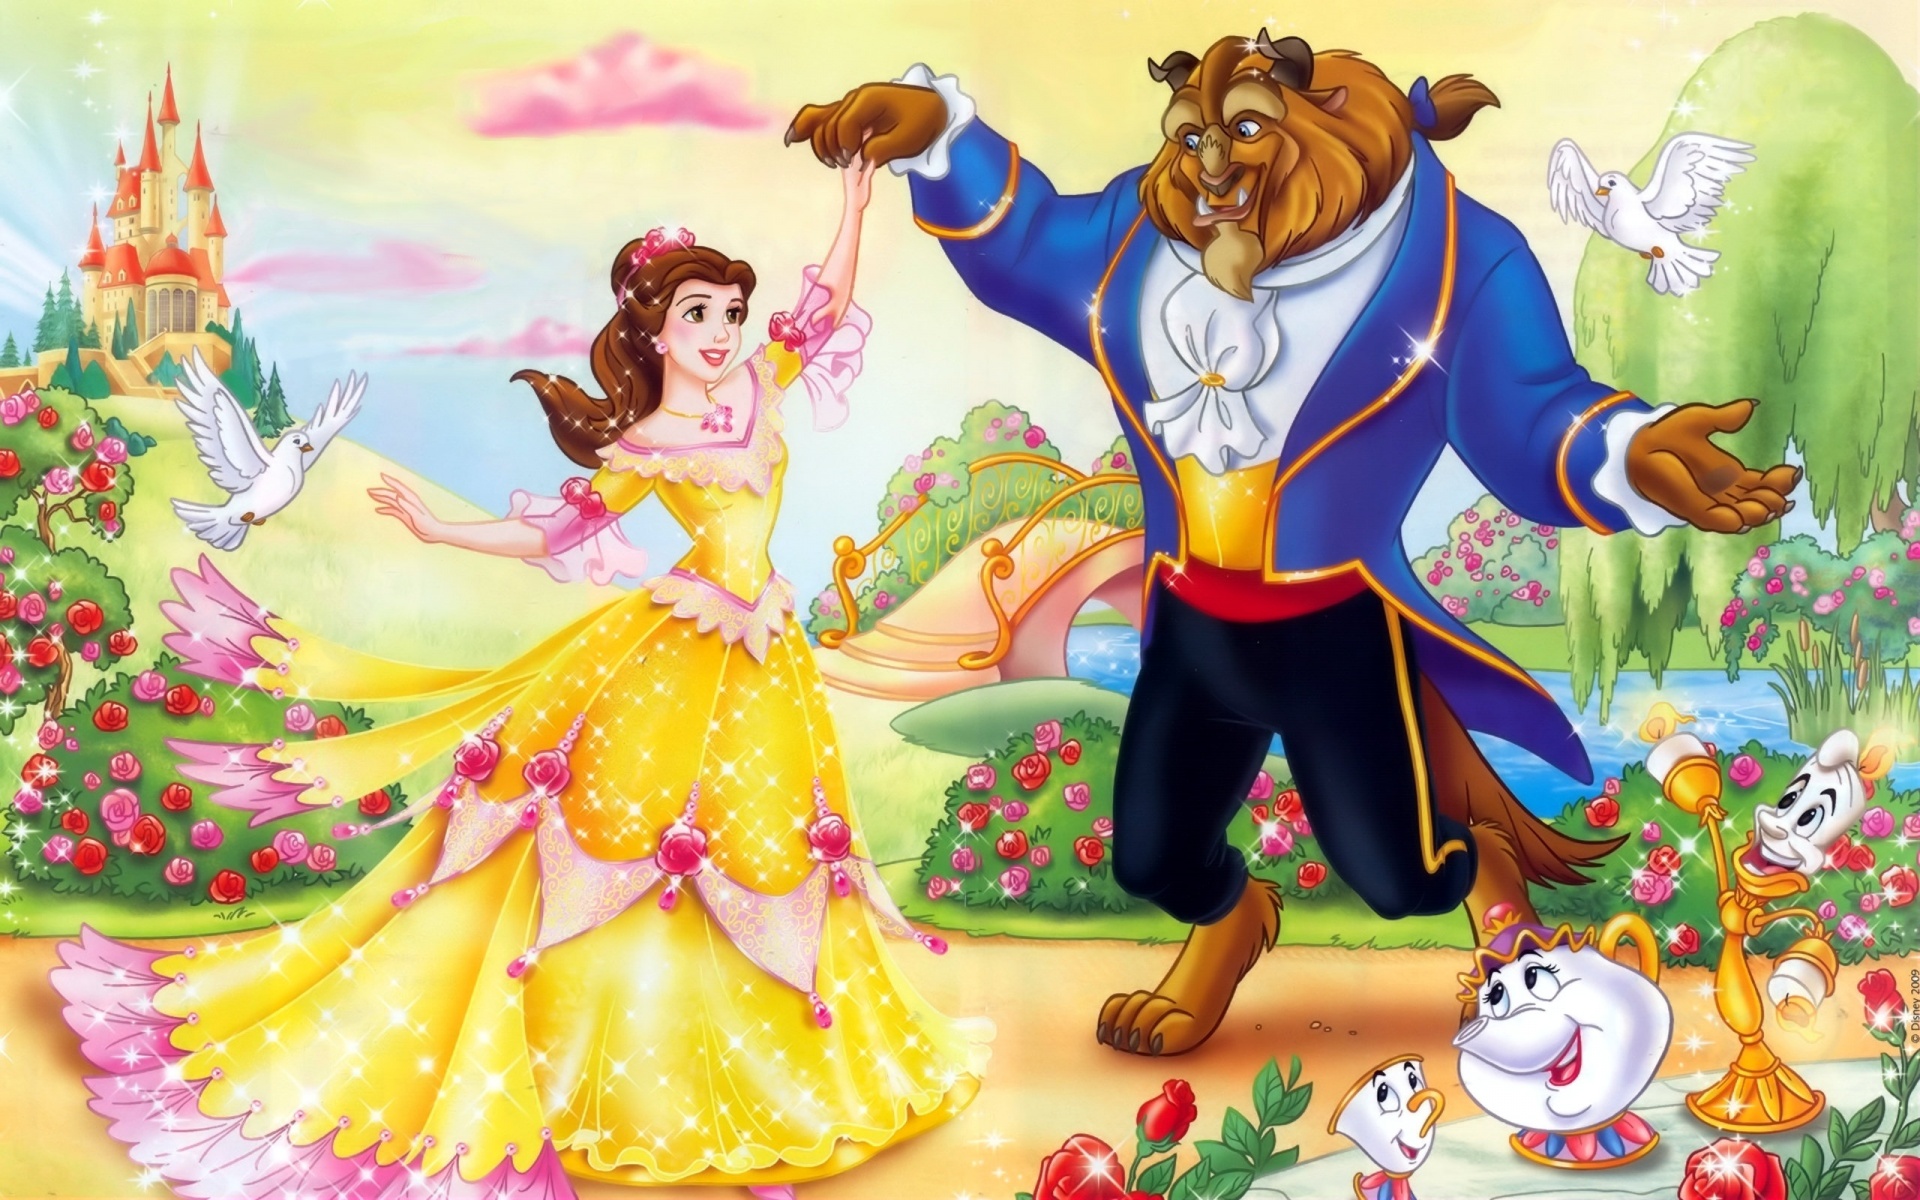 Beauty and the Beast - Disney Princess Wallpaper (30378285) - Fanpop